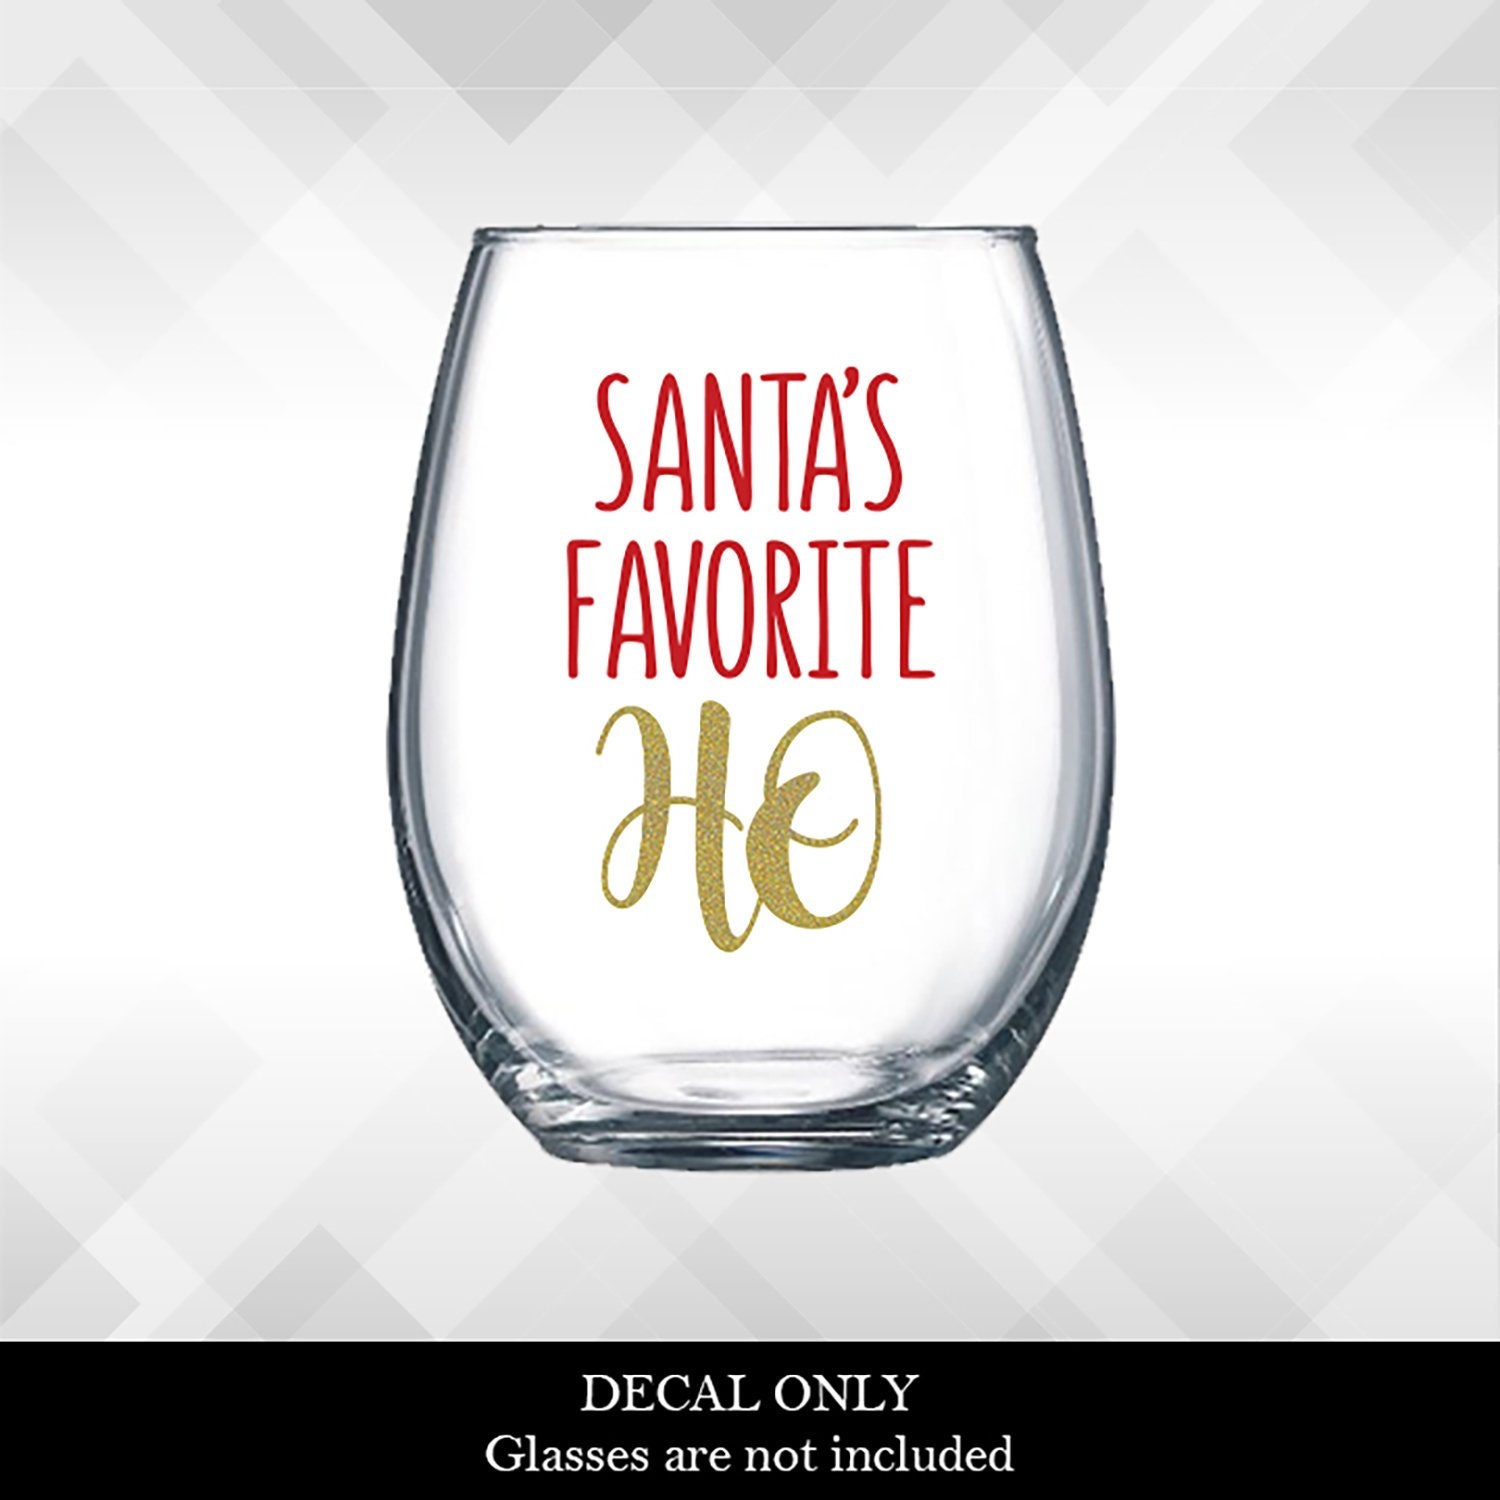 Naughty Christmas + Santa's Favorite Ho Personalized Wine Tumblers